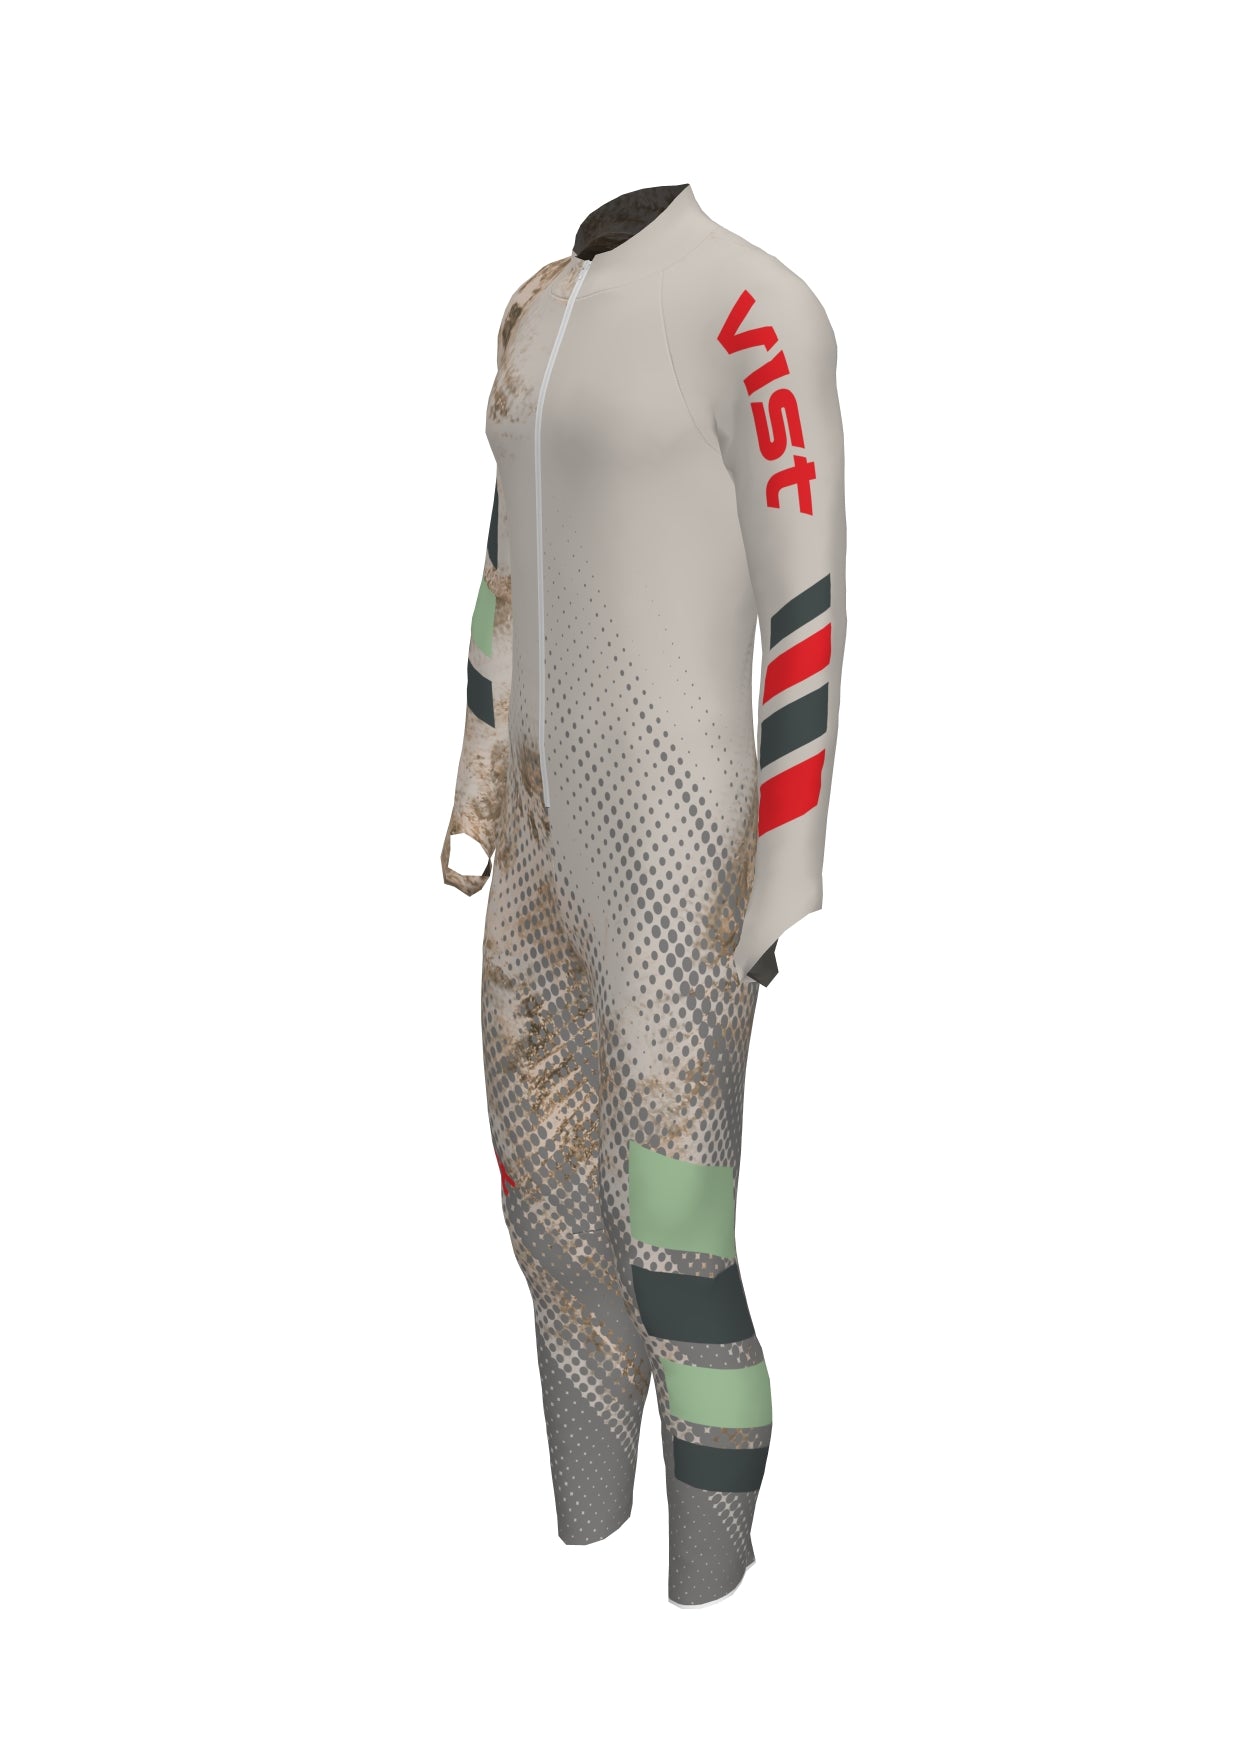 5th Element Padded Race Suit - Vist ski apparel